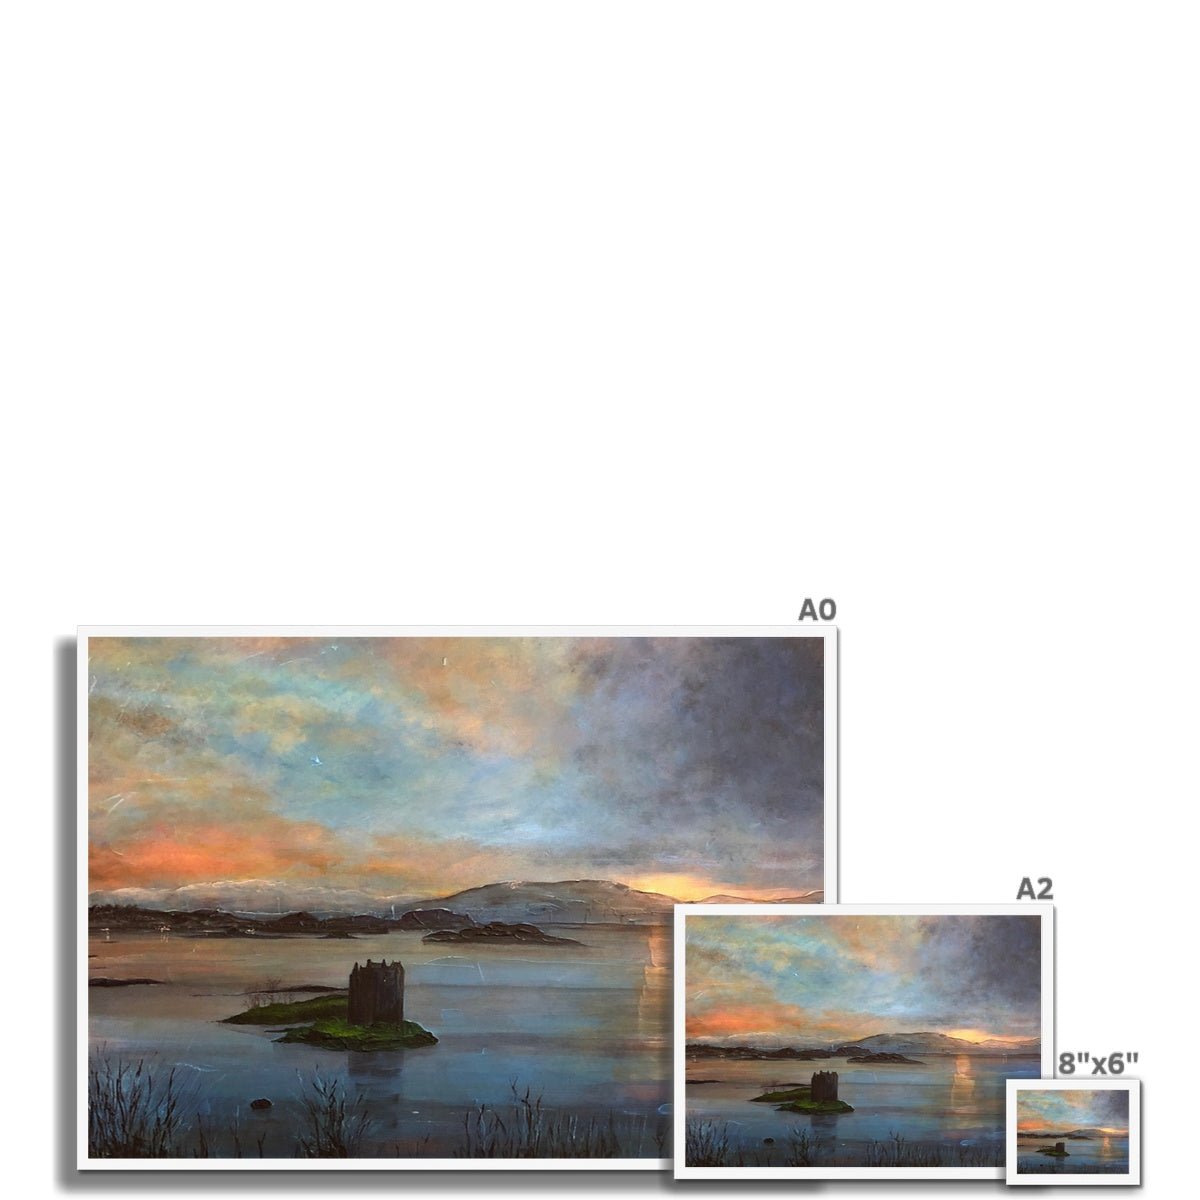 Castle Stalker Twilight Painting | Framed Prints From Scotland-Framed Prints-Scottish Castles Art Gallery-Paintings, Prints, Homeware, Art Gifts From Scotland By Scottish Artist Kevin Hunter